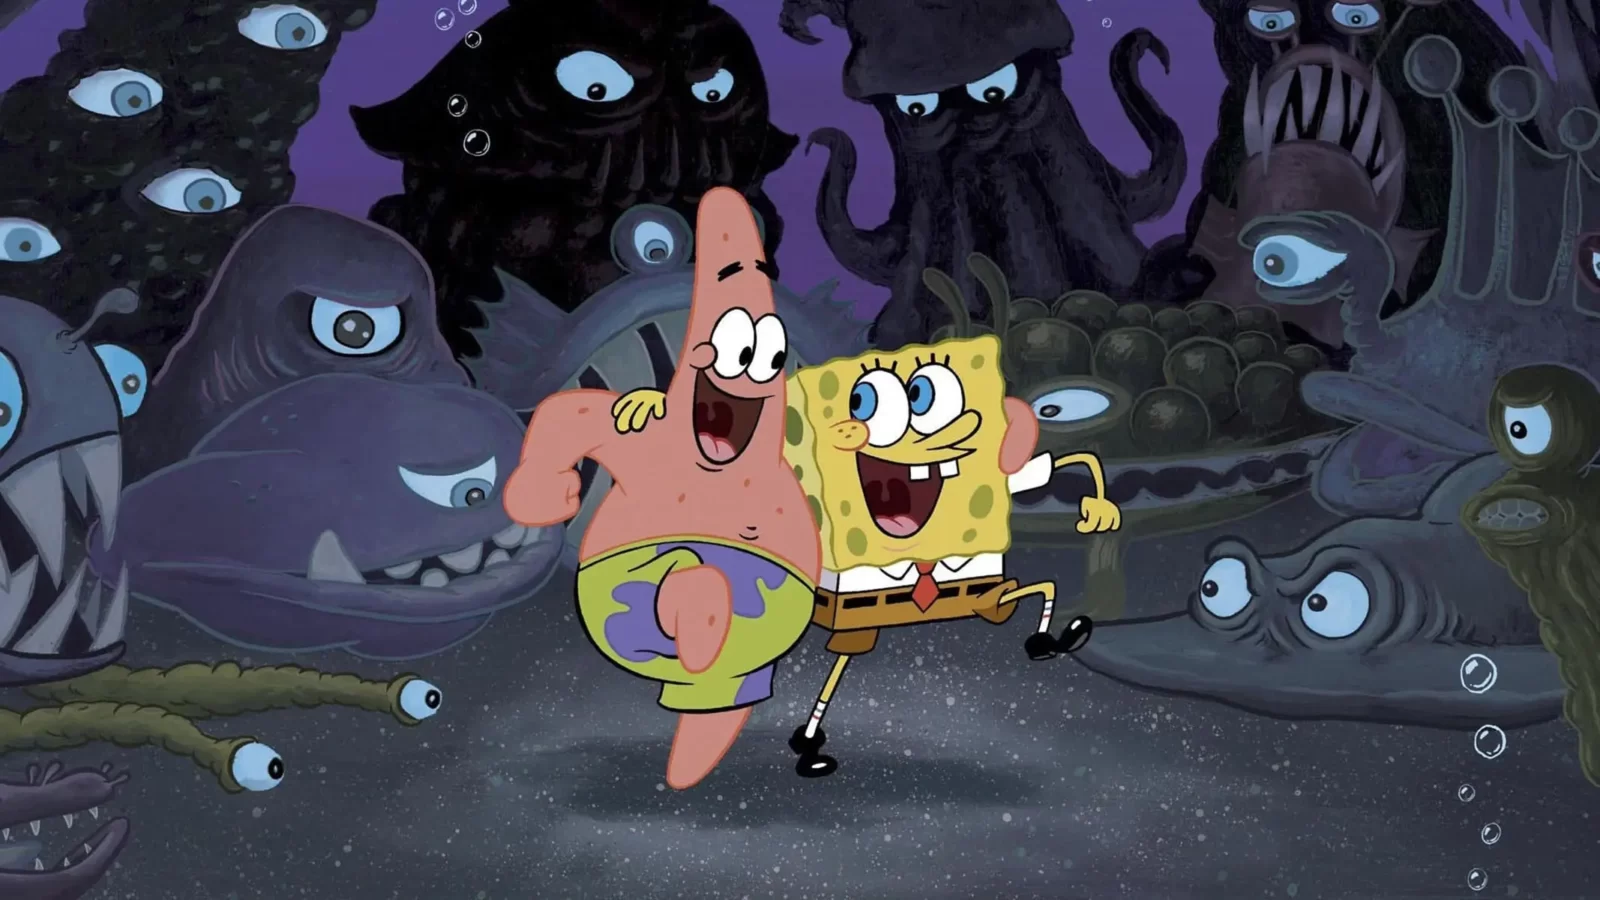 SpongeBob SquarePants in the dark night fear monsters